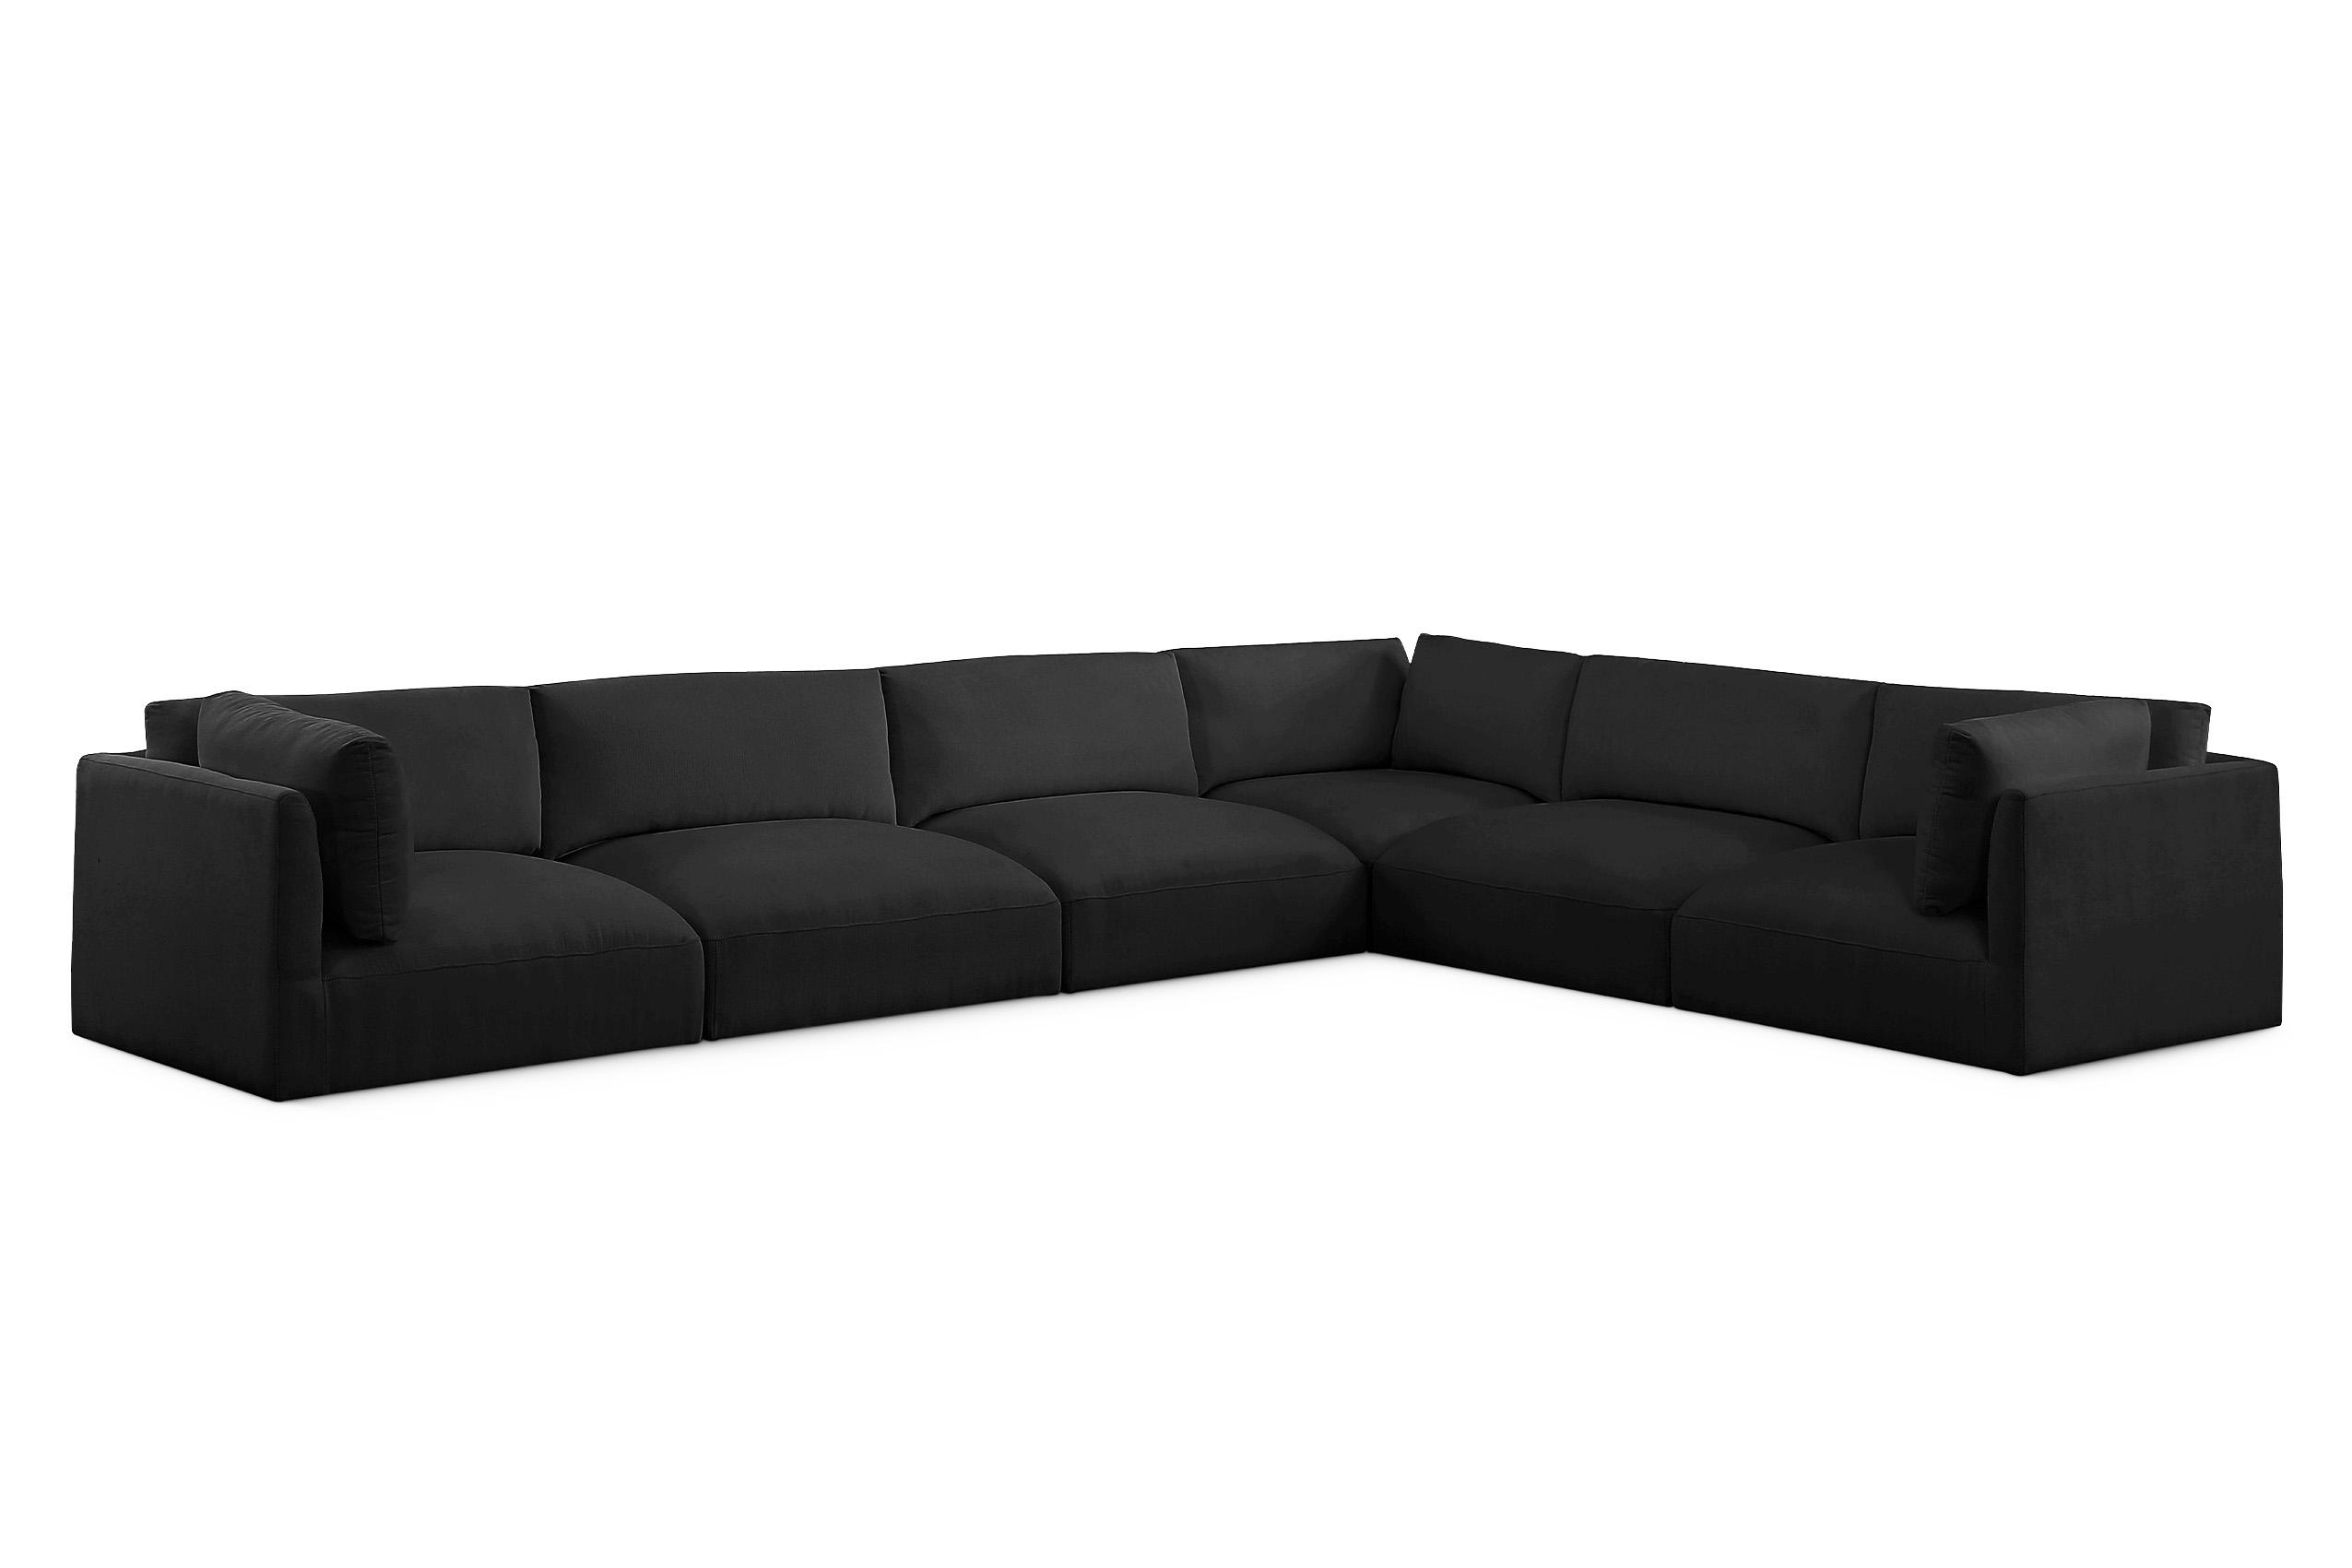 Contemporary, Modern Modular Sectional Sofa EASE 696Black-Sec6D 696Black-Sec6D in Black Fabric